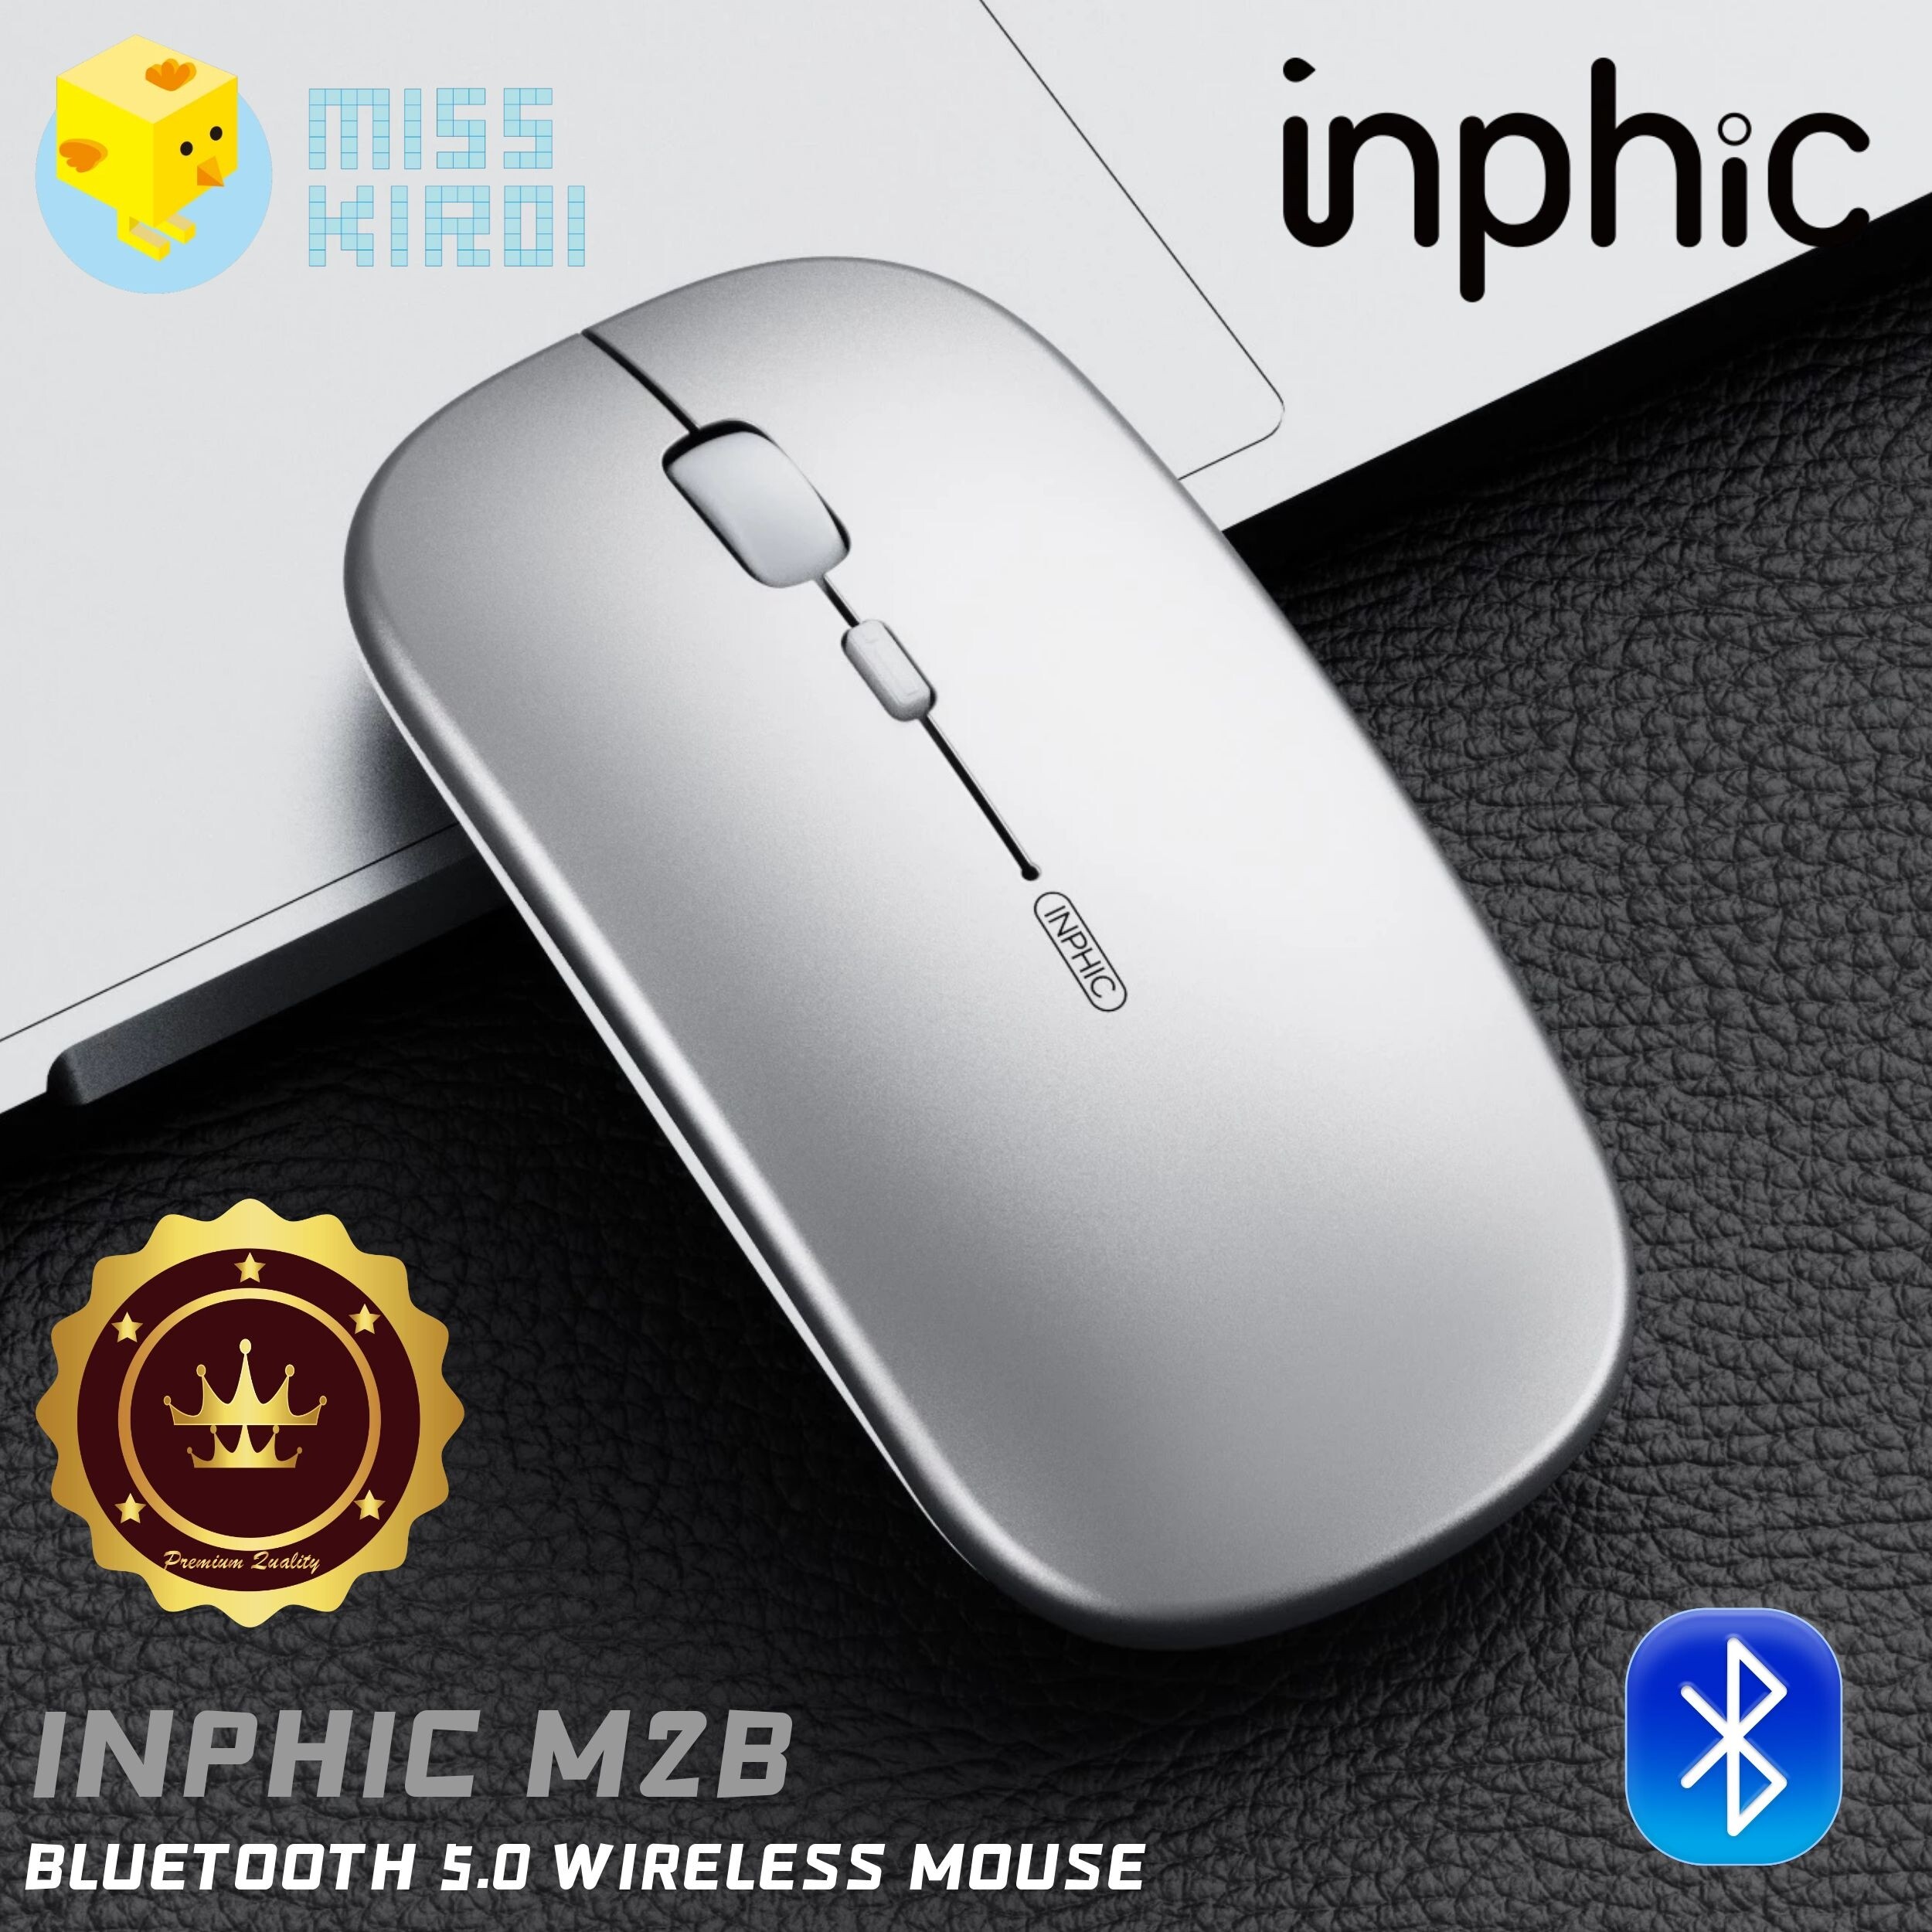 Inphic M2B Bluetooth 5.0 Mouse เมาส์บลูทูธ ไร้สาย สำหรับ คอมพิวเตอร์ และโน๊ตบุ้ค (สีดำ/สีเงิน)  800-1200-1600DPI Rechargeable Battery